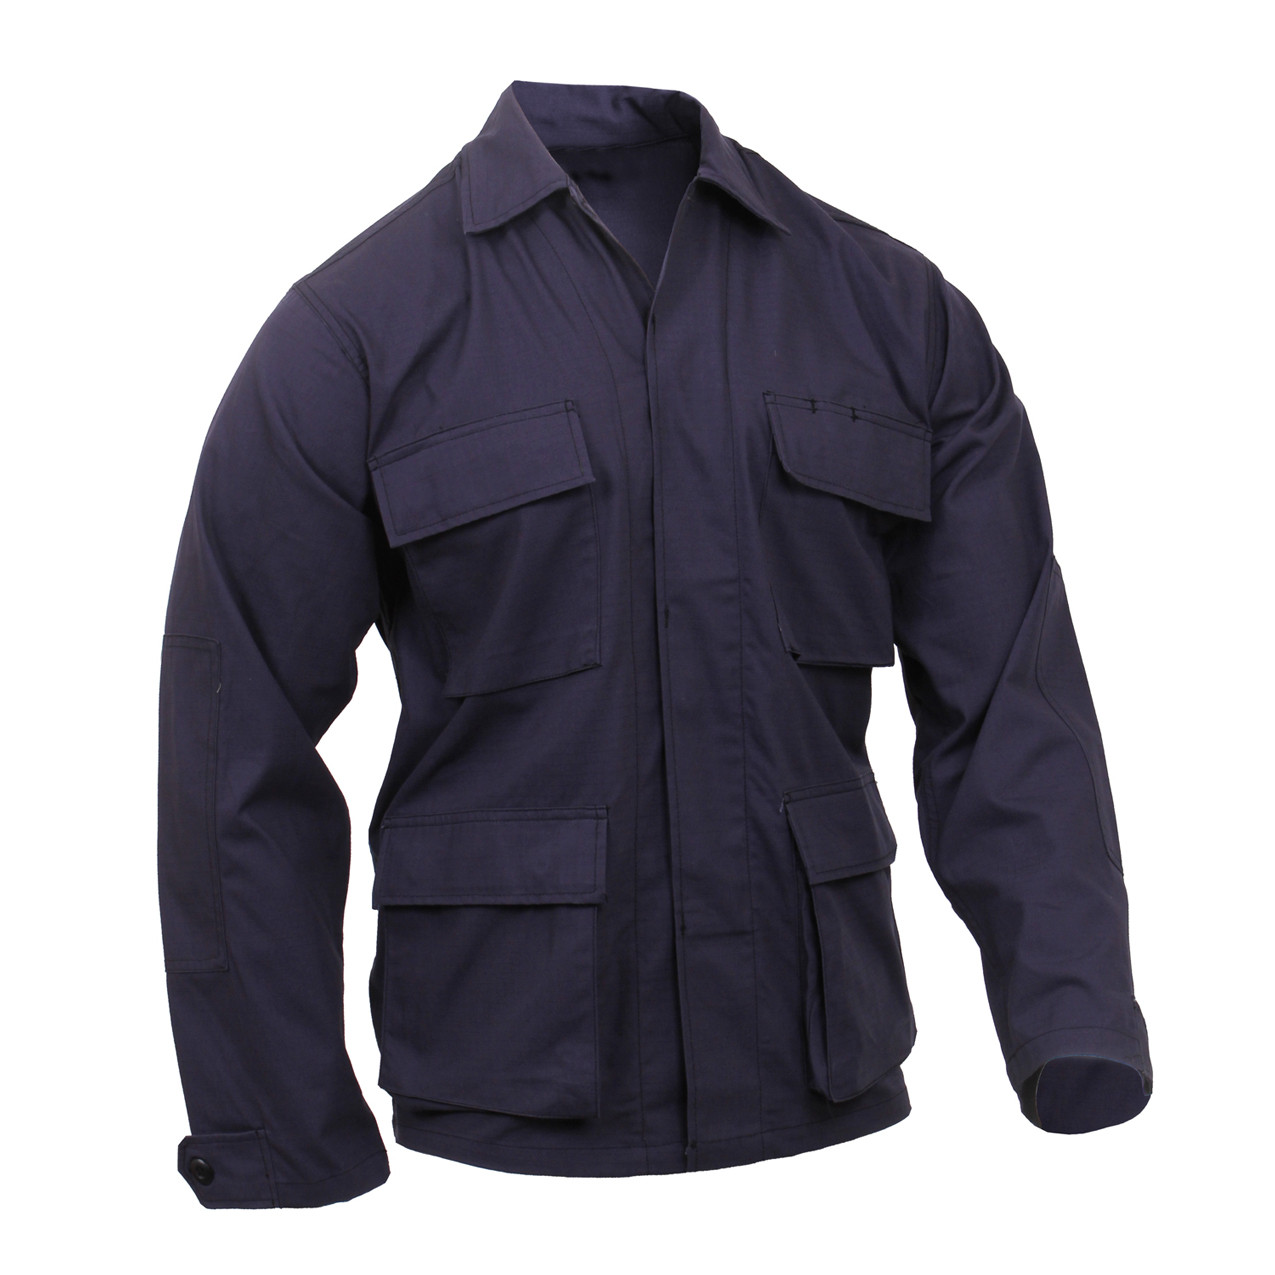 Shop Rothco Navy 100% Ripstop Cotton BDU Jackets - Fatigues Army Navy Gear